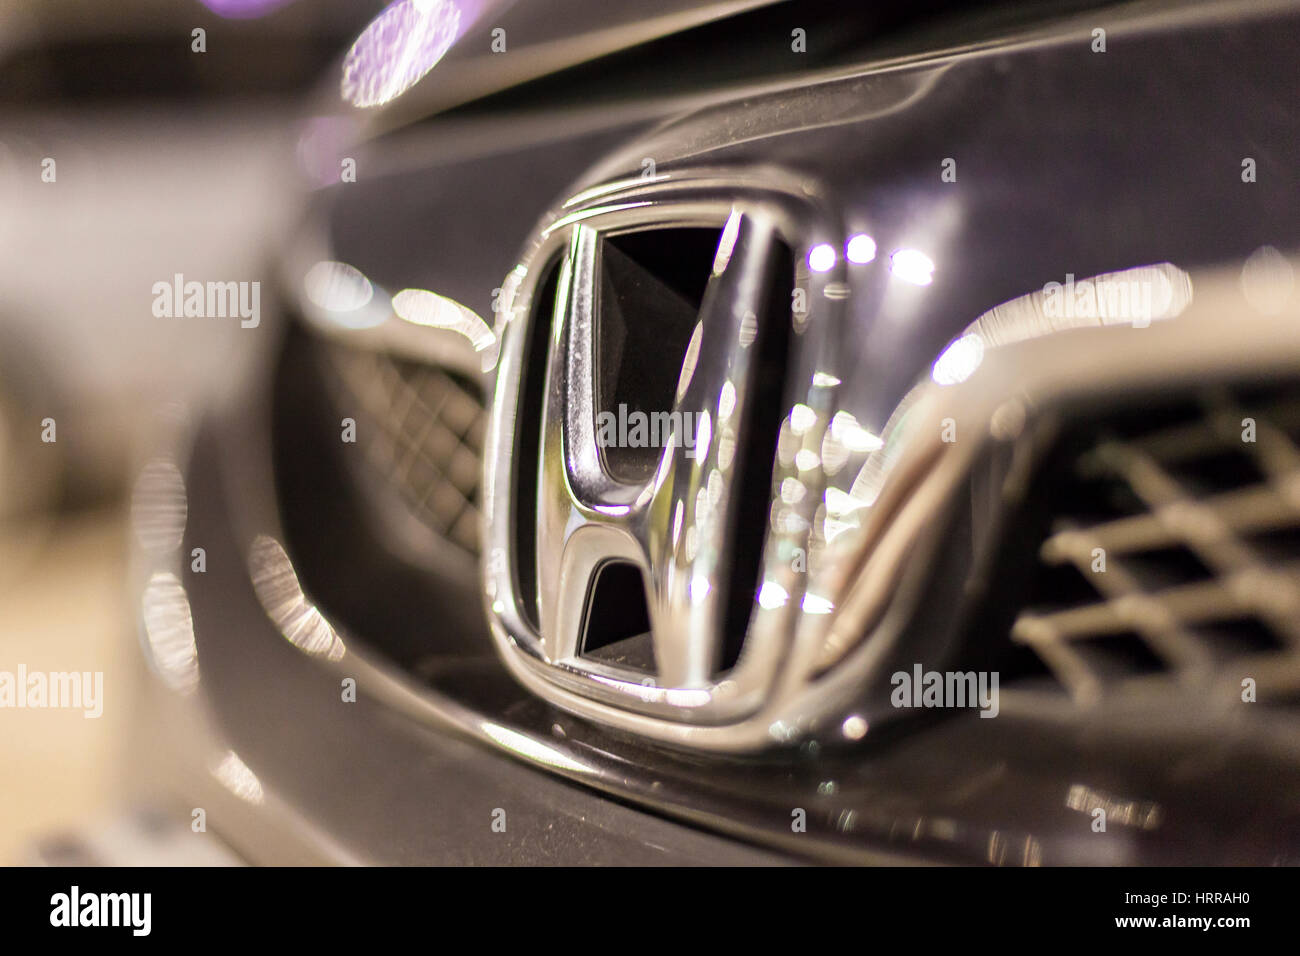 ABU DHABI, UAE - NOV 26, 2016: Honda company logo on a car illuminated at night Stock Photo